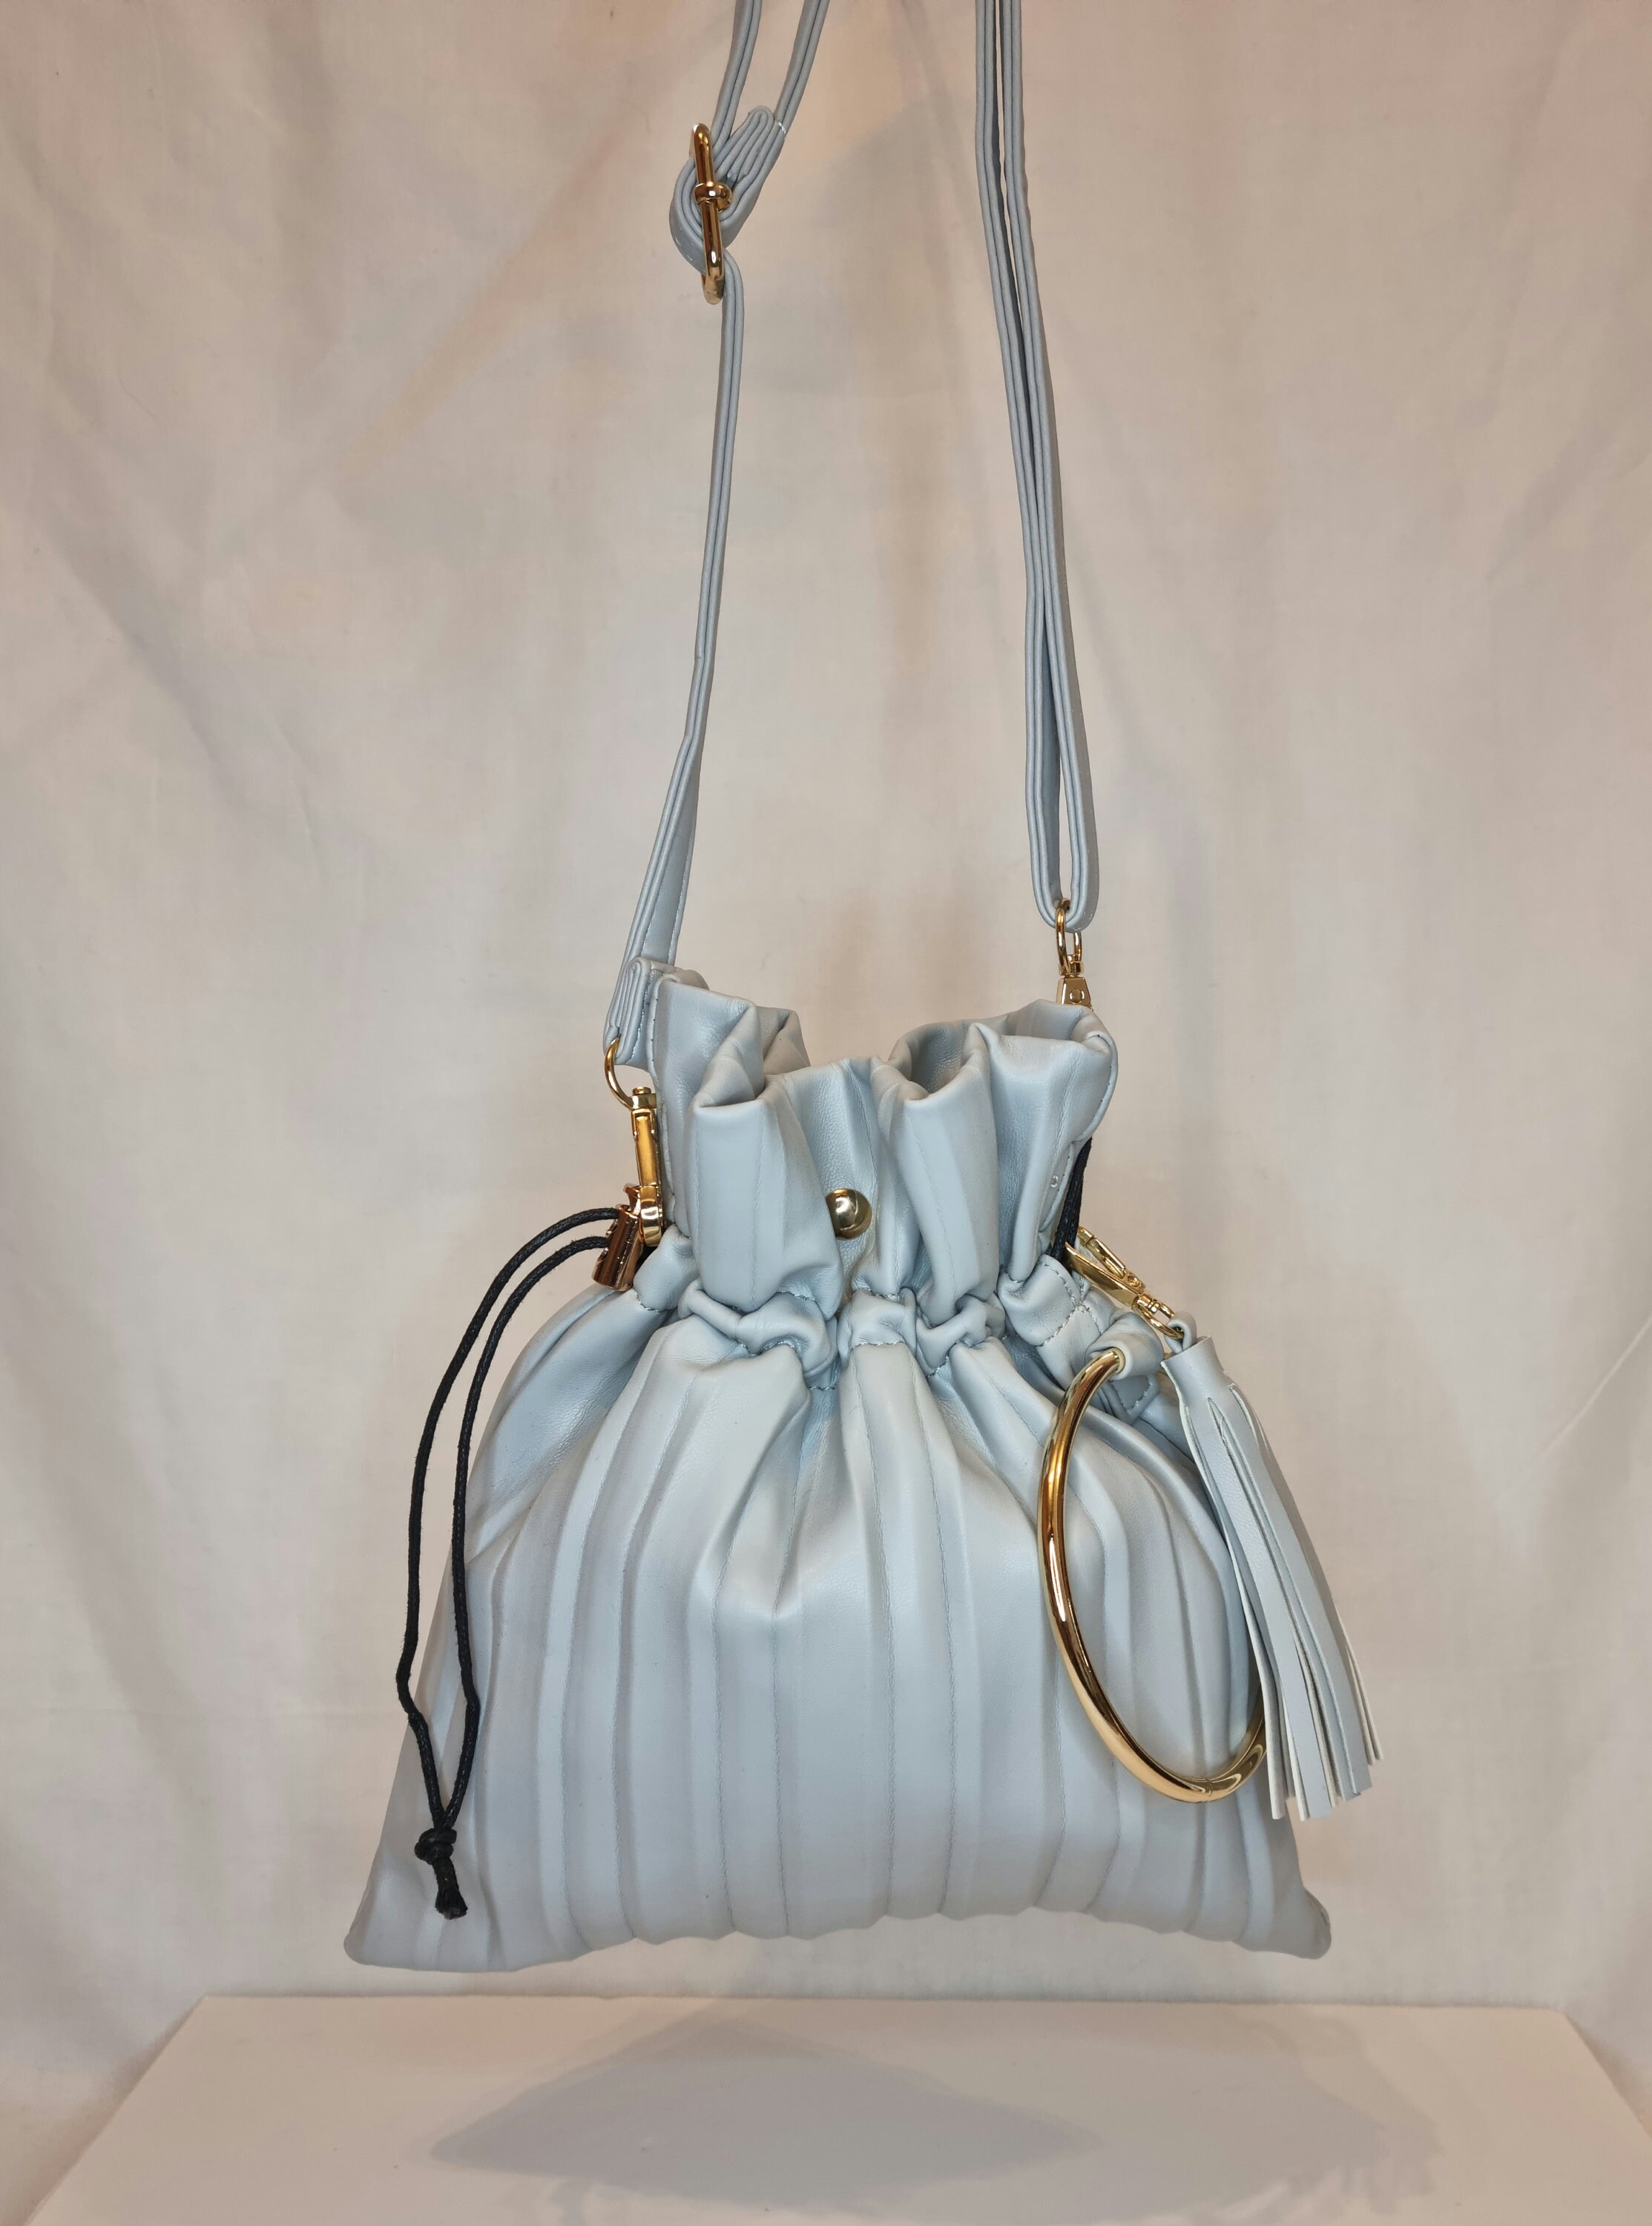 TAH Leather Fringe Tassel Bag Accessory BlushITAH